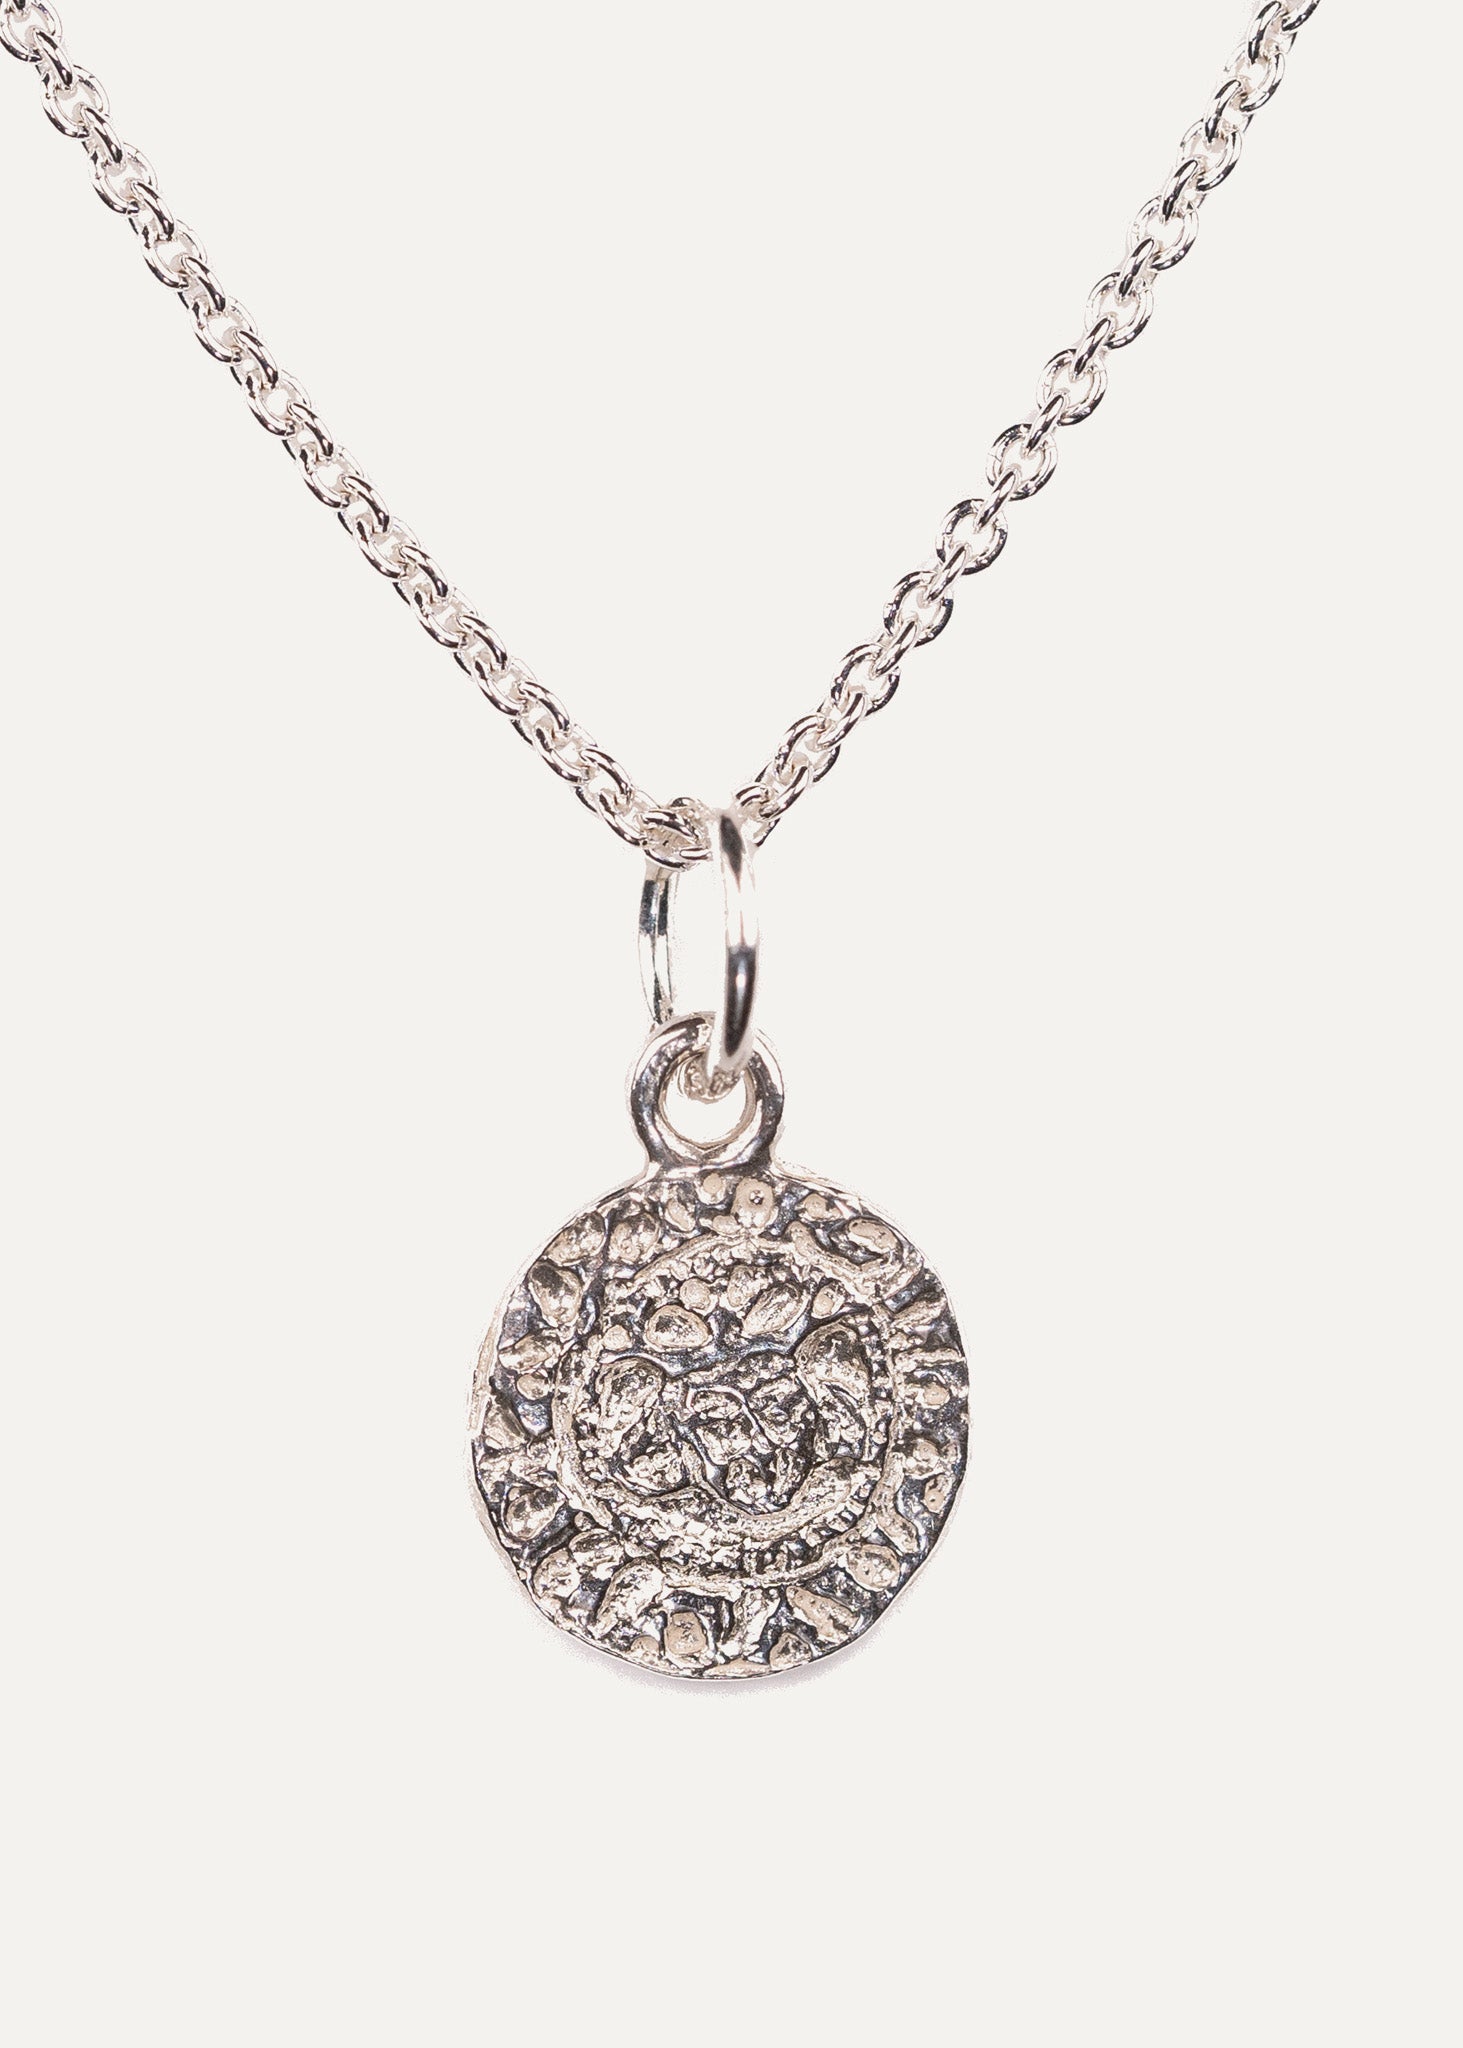 Quarterpenny necklace in silver